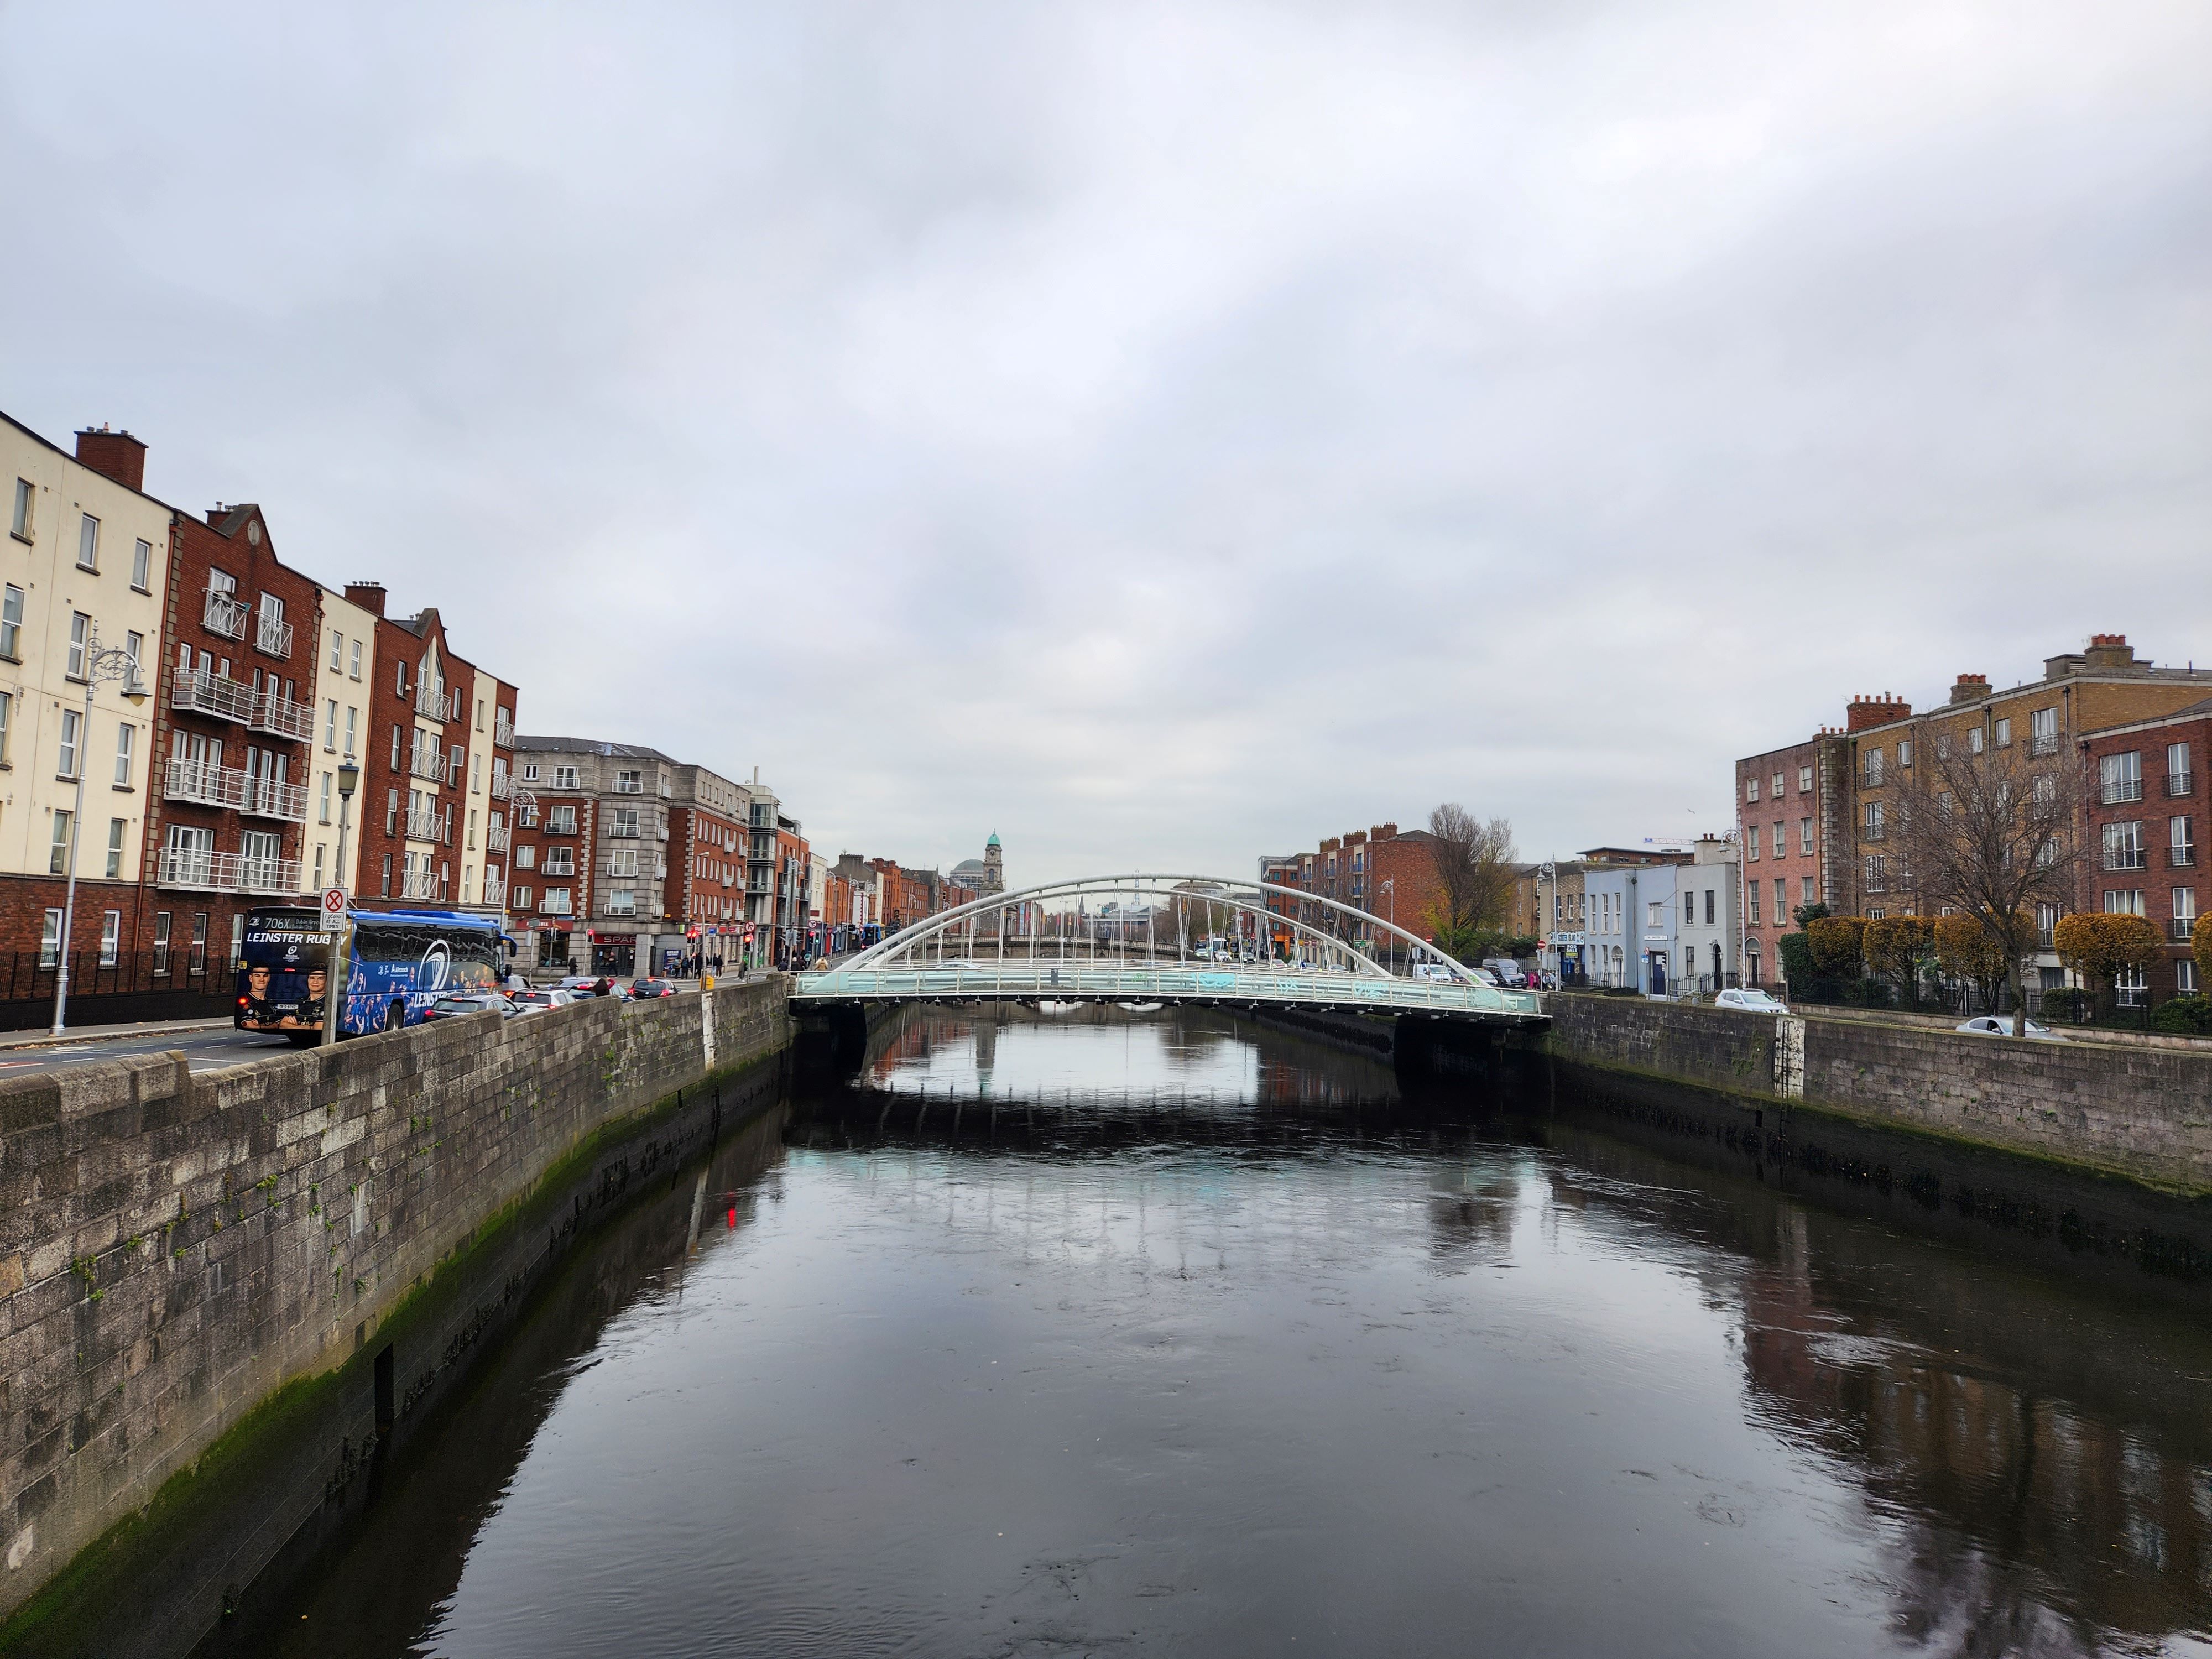 Bridge over River Liffey - one day in Dublin